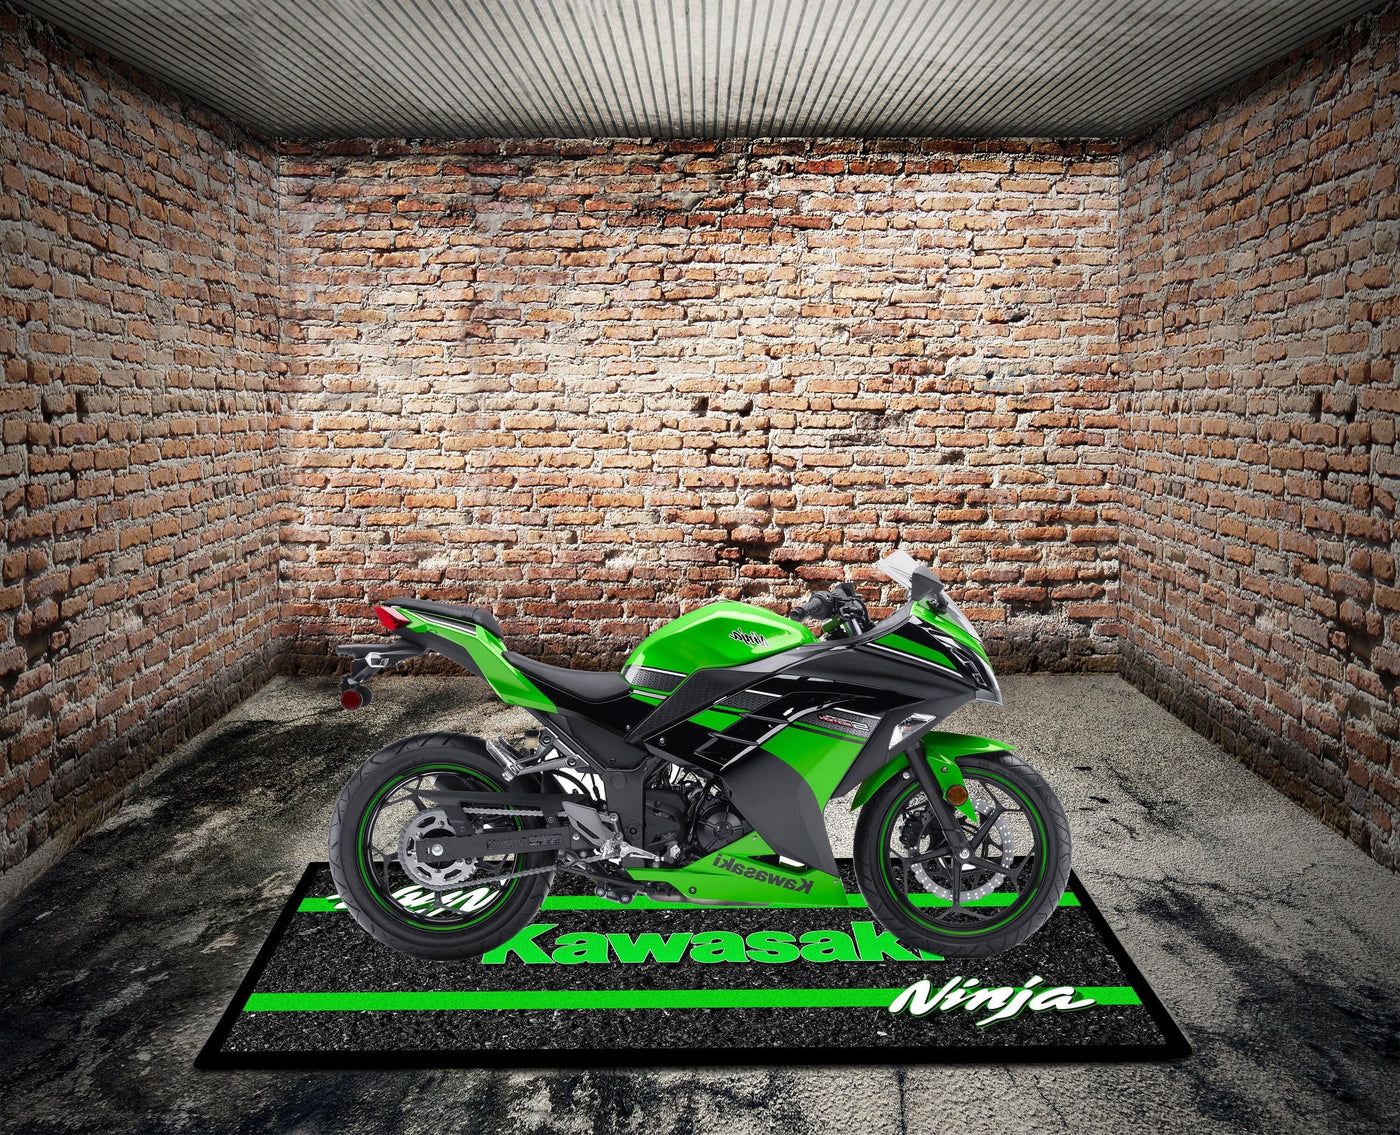 Designed Motorcycle Mat for Kawasaki Ninja - Motorcycle Pit Mat